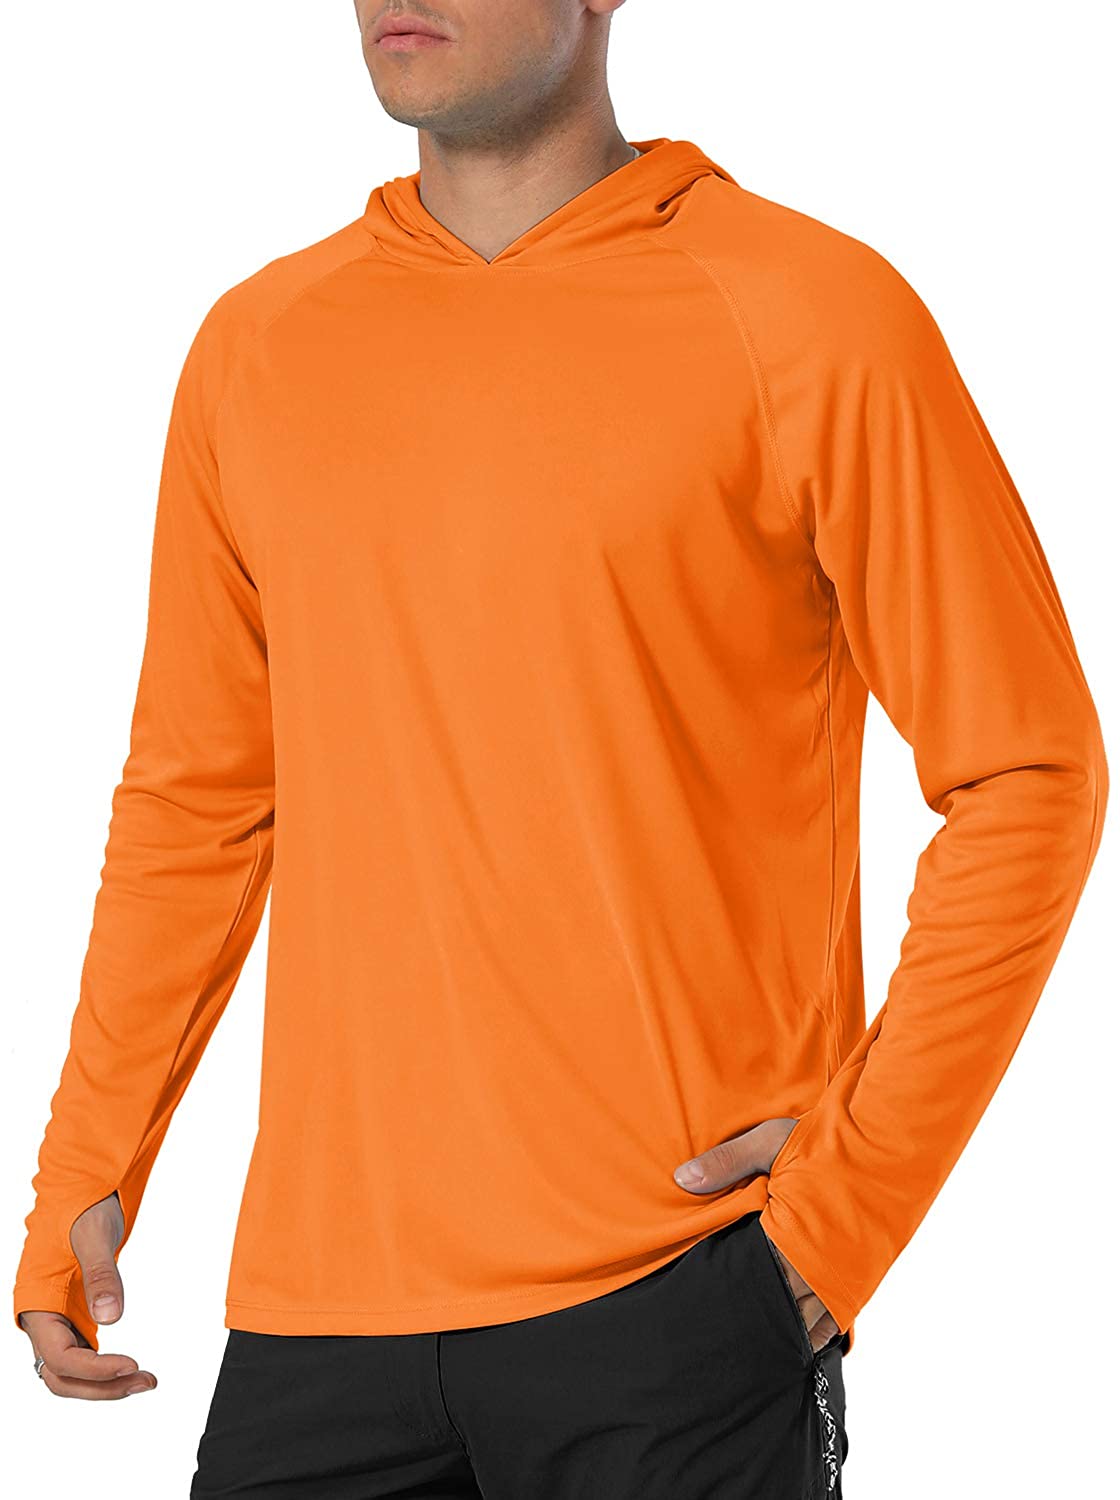 TACVASEN Men's Hiking Shirts UPF 50 UV Sun Protection Athletic Hoodies Workout Training Shirts